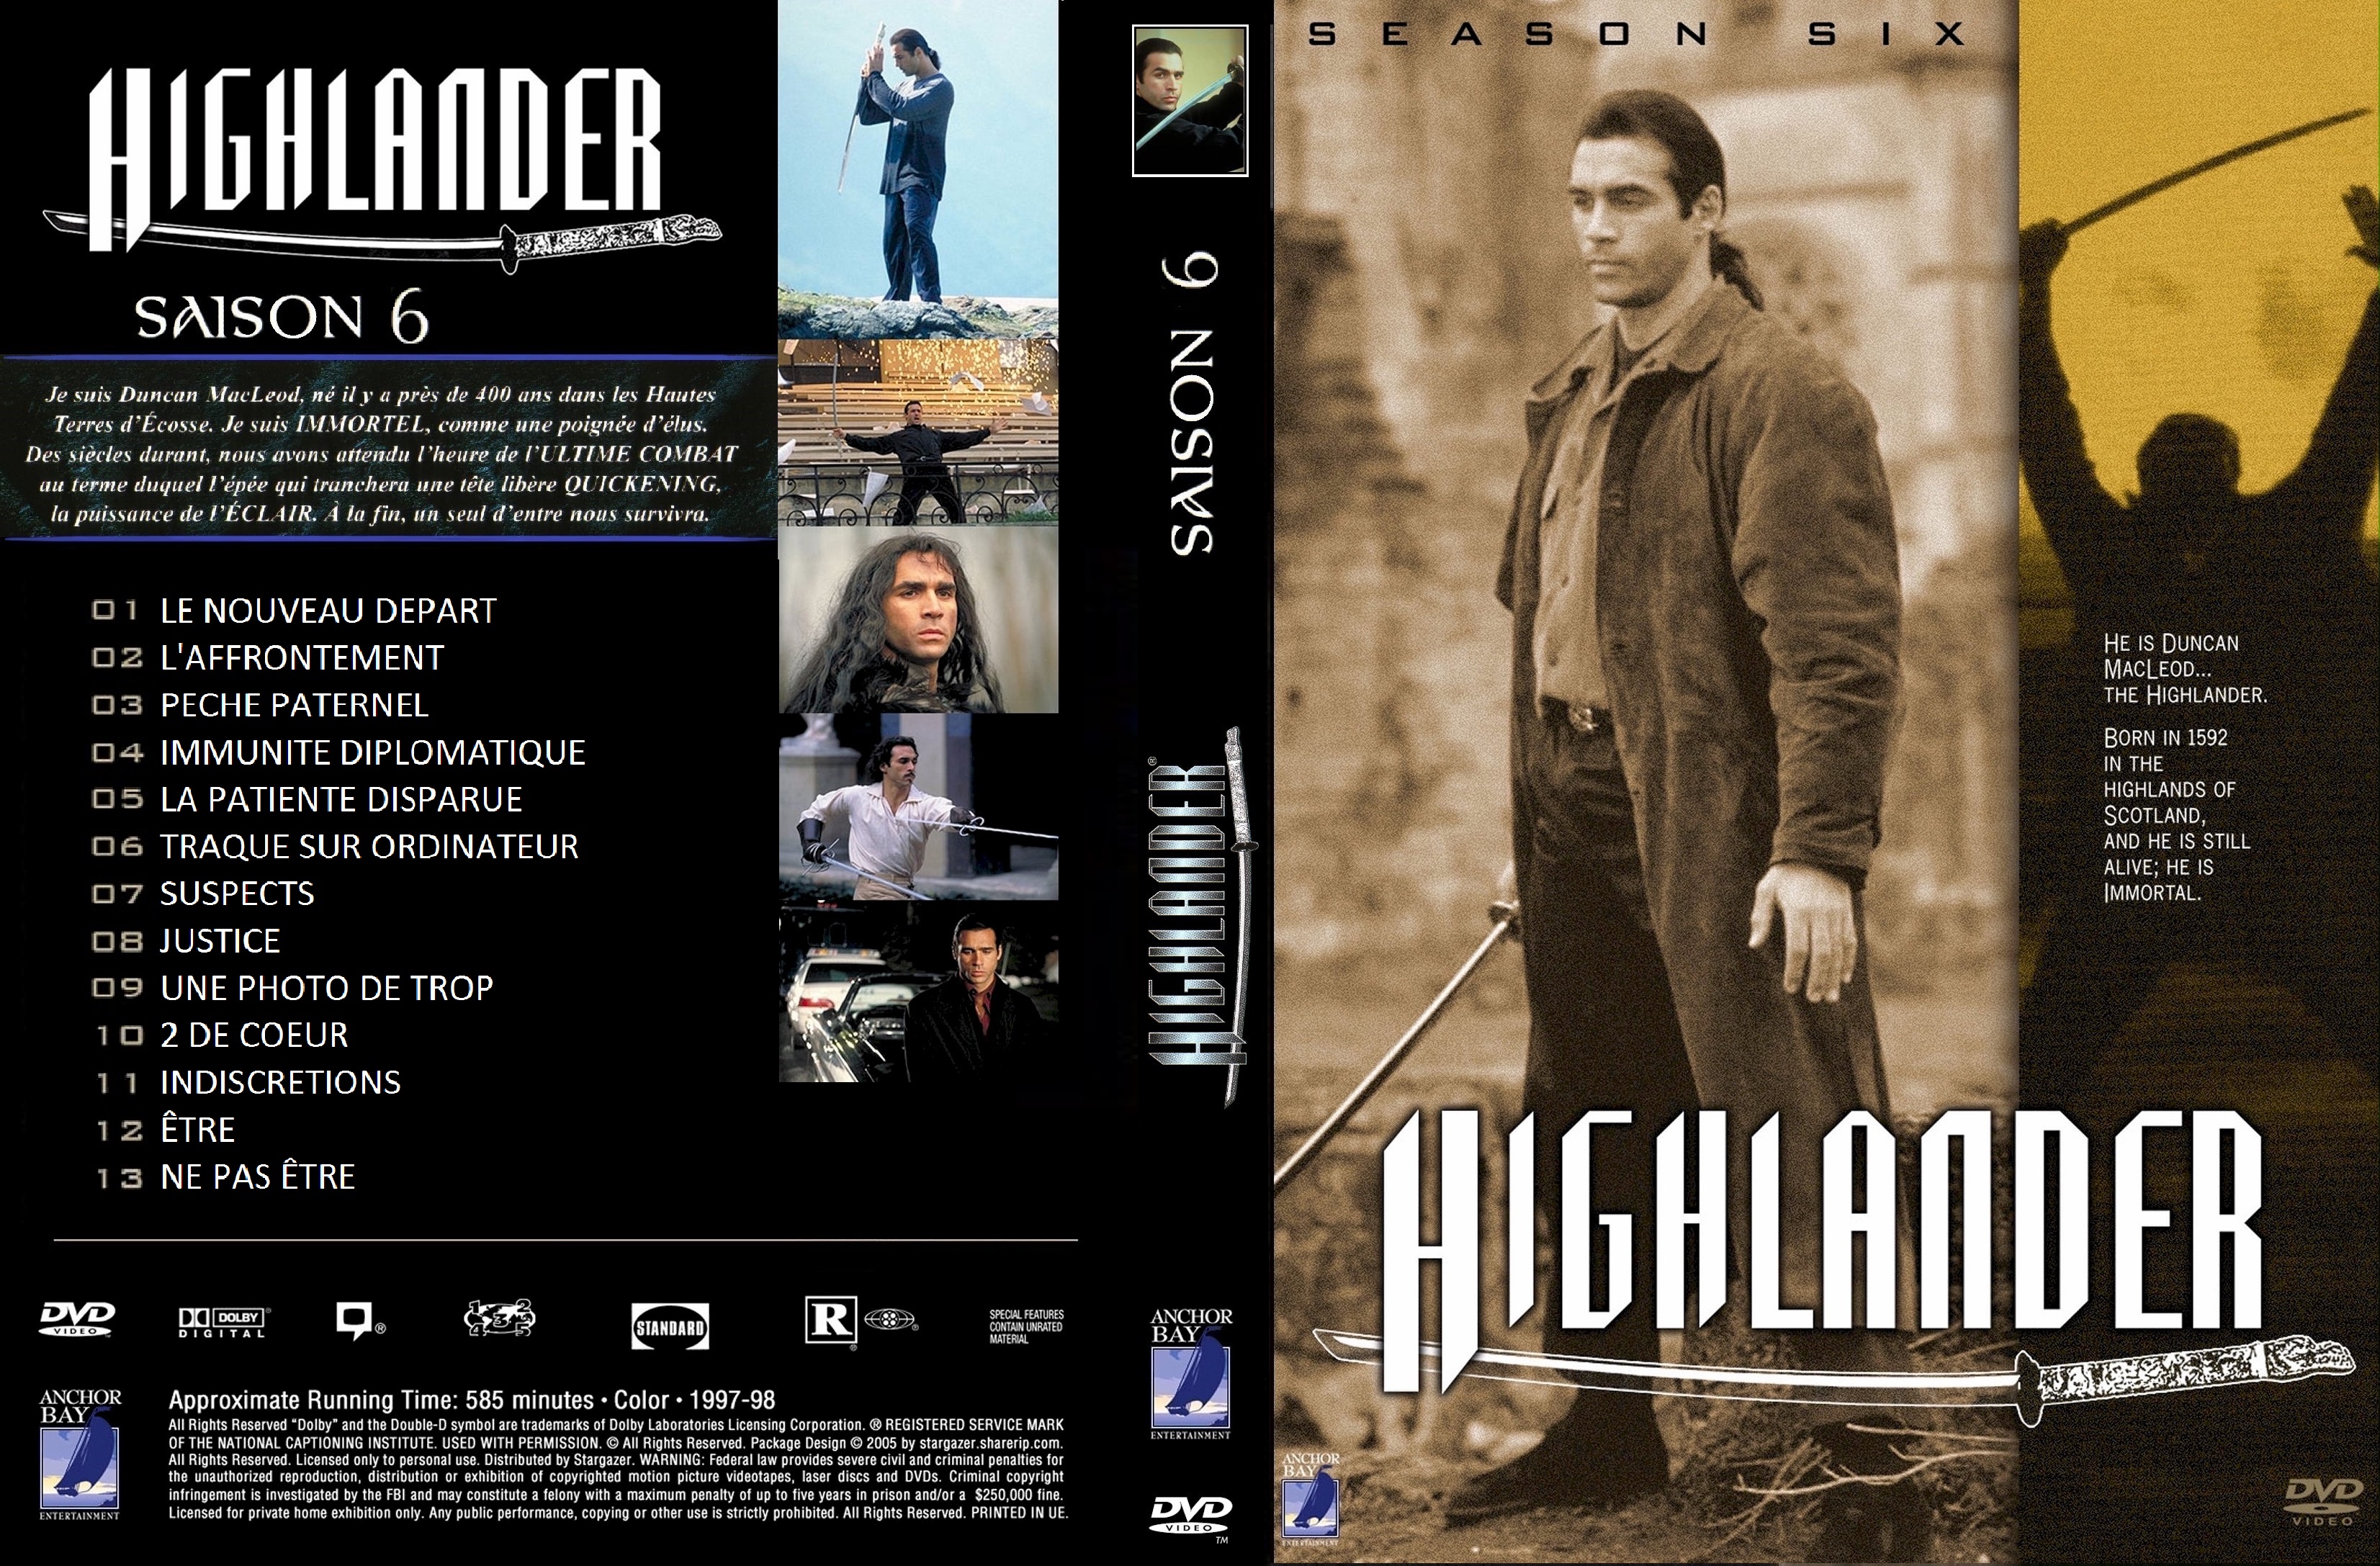 Jaquette DVD Highlander saison 6 custom 